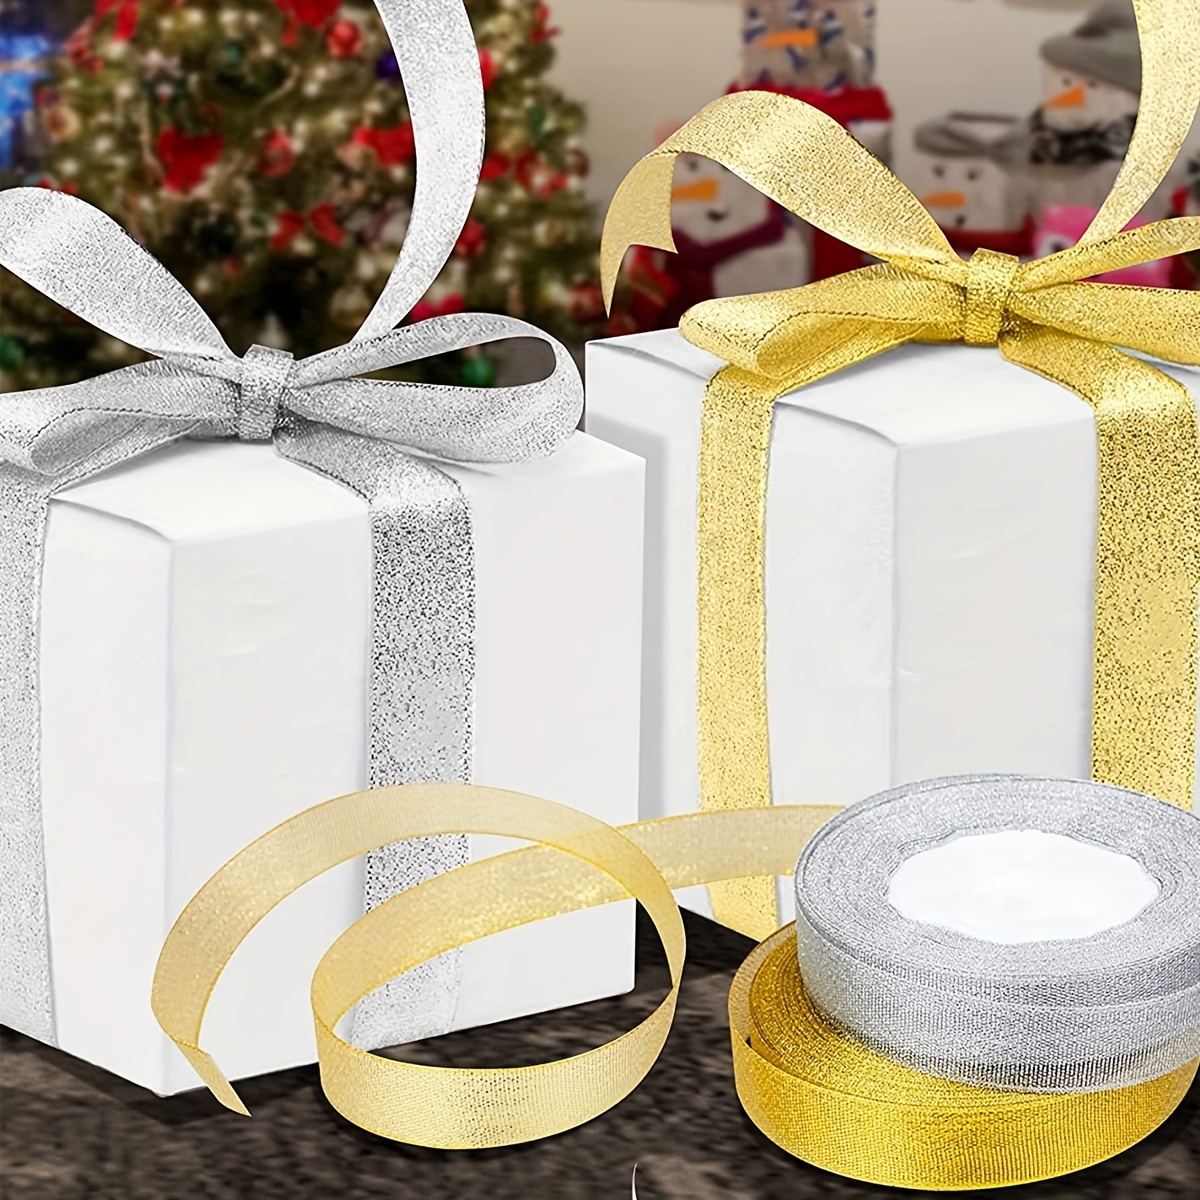  Cinta plateada para envolver regalos, cinta plateada de satén  de 3/8 pulgadas para manualidades, cinta plateada para árbol de Navidad,  cinta gris, envoltura de regalos, globos de invitación, manualidades,  costura, fiesta